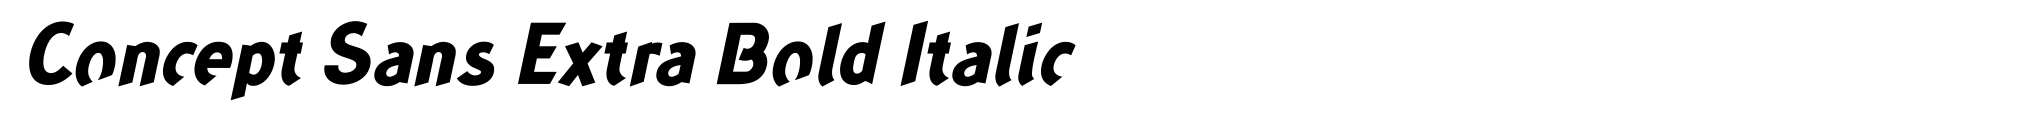 Concept Sans Extra Bold Italic image